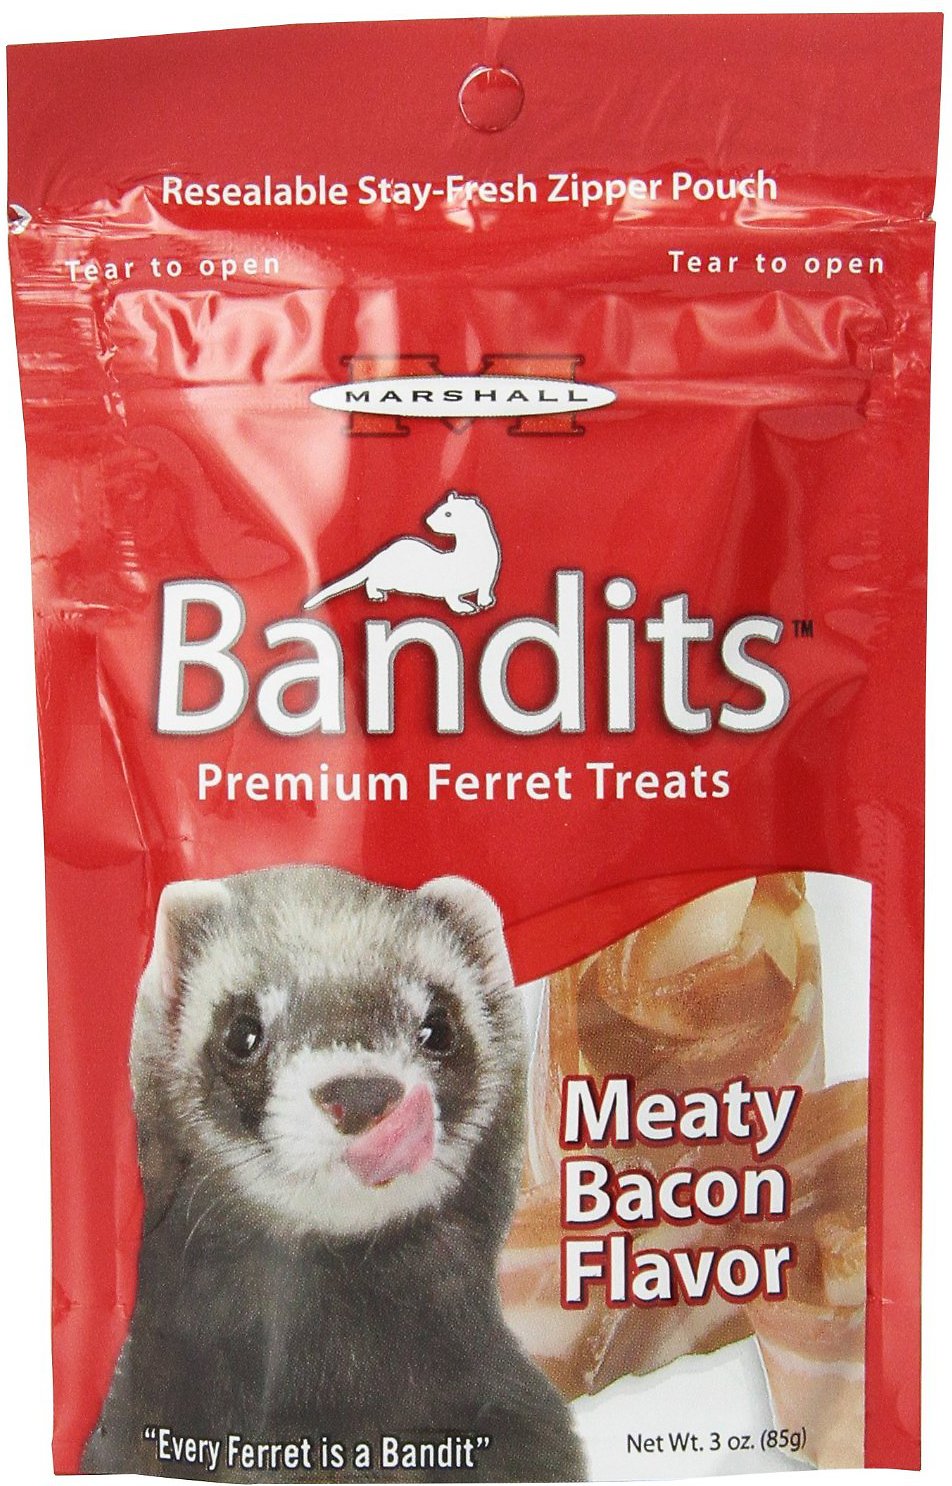 Marshall Bandits Meaty Bacon Flavor